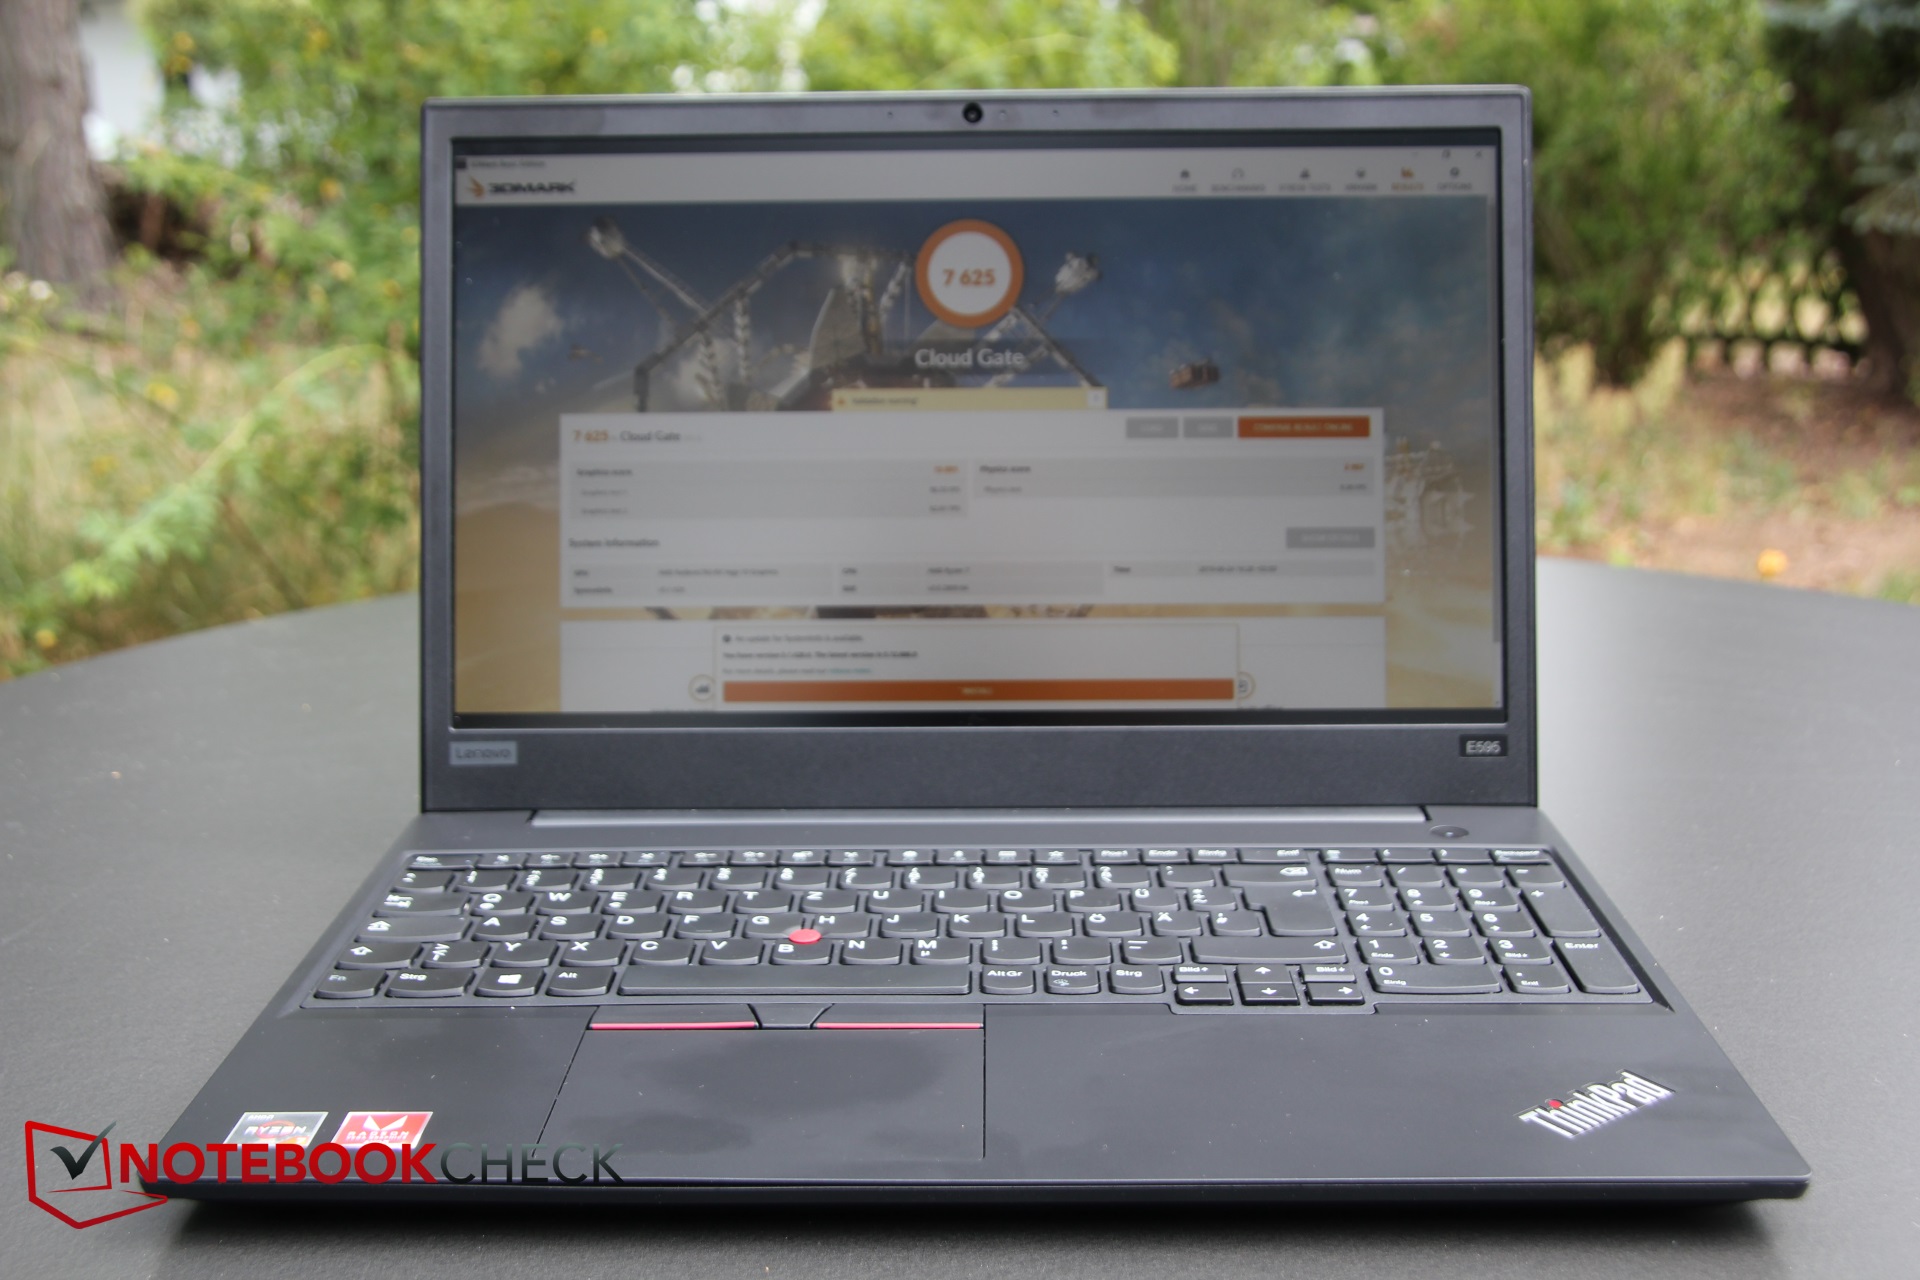 Lenovo ThinkPad E595 laptop review: AMD laptop better than its 